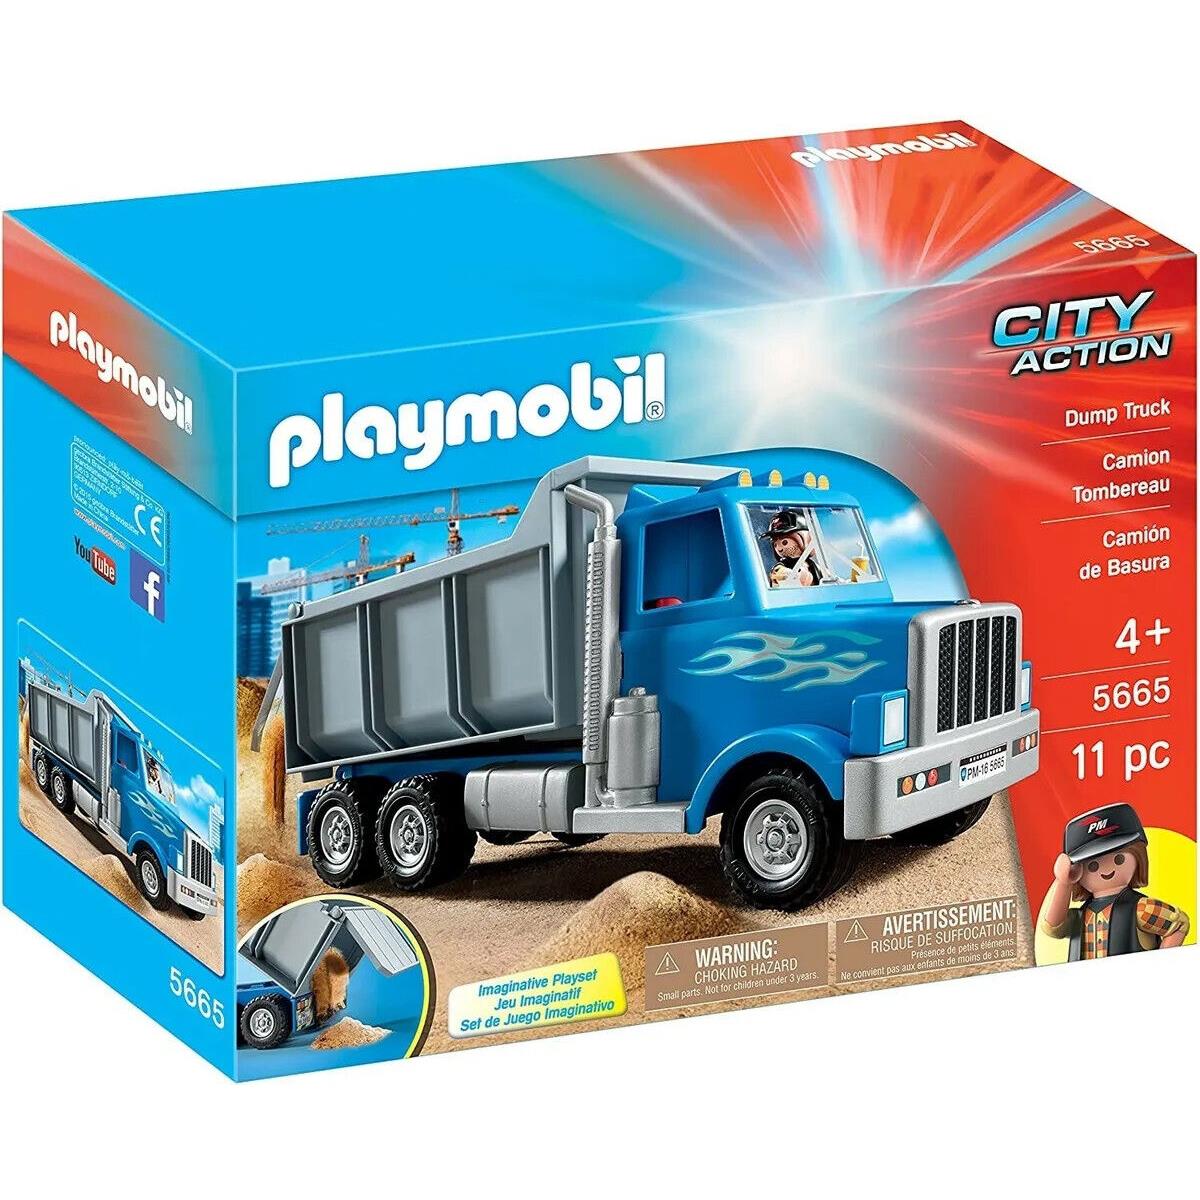 Playmobil 5665 City Action Blue Dump Truck Construction Vehicle